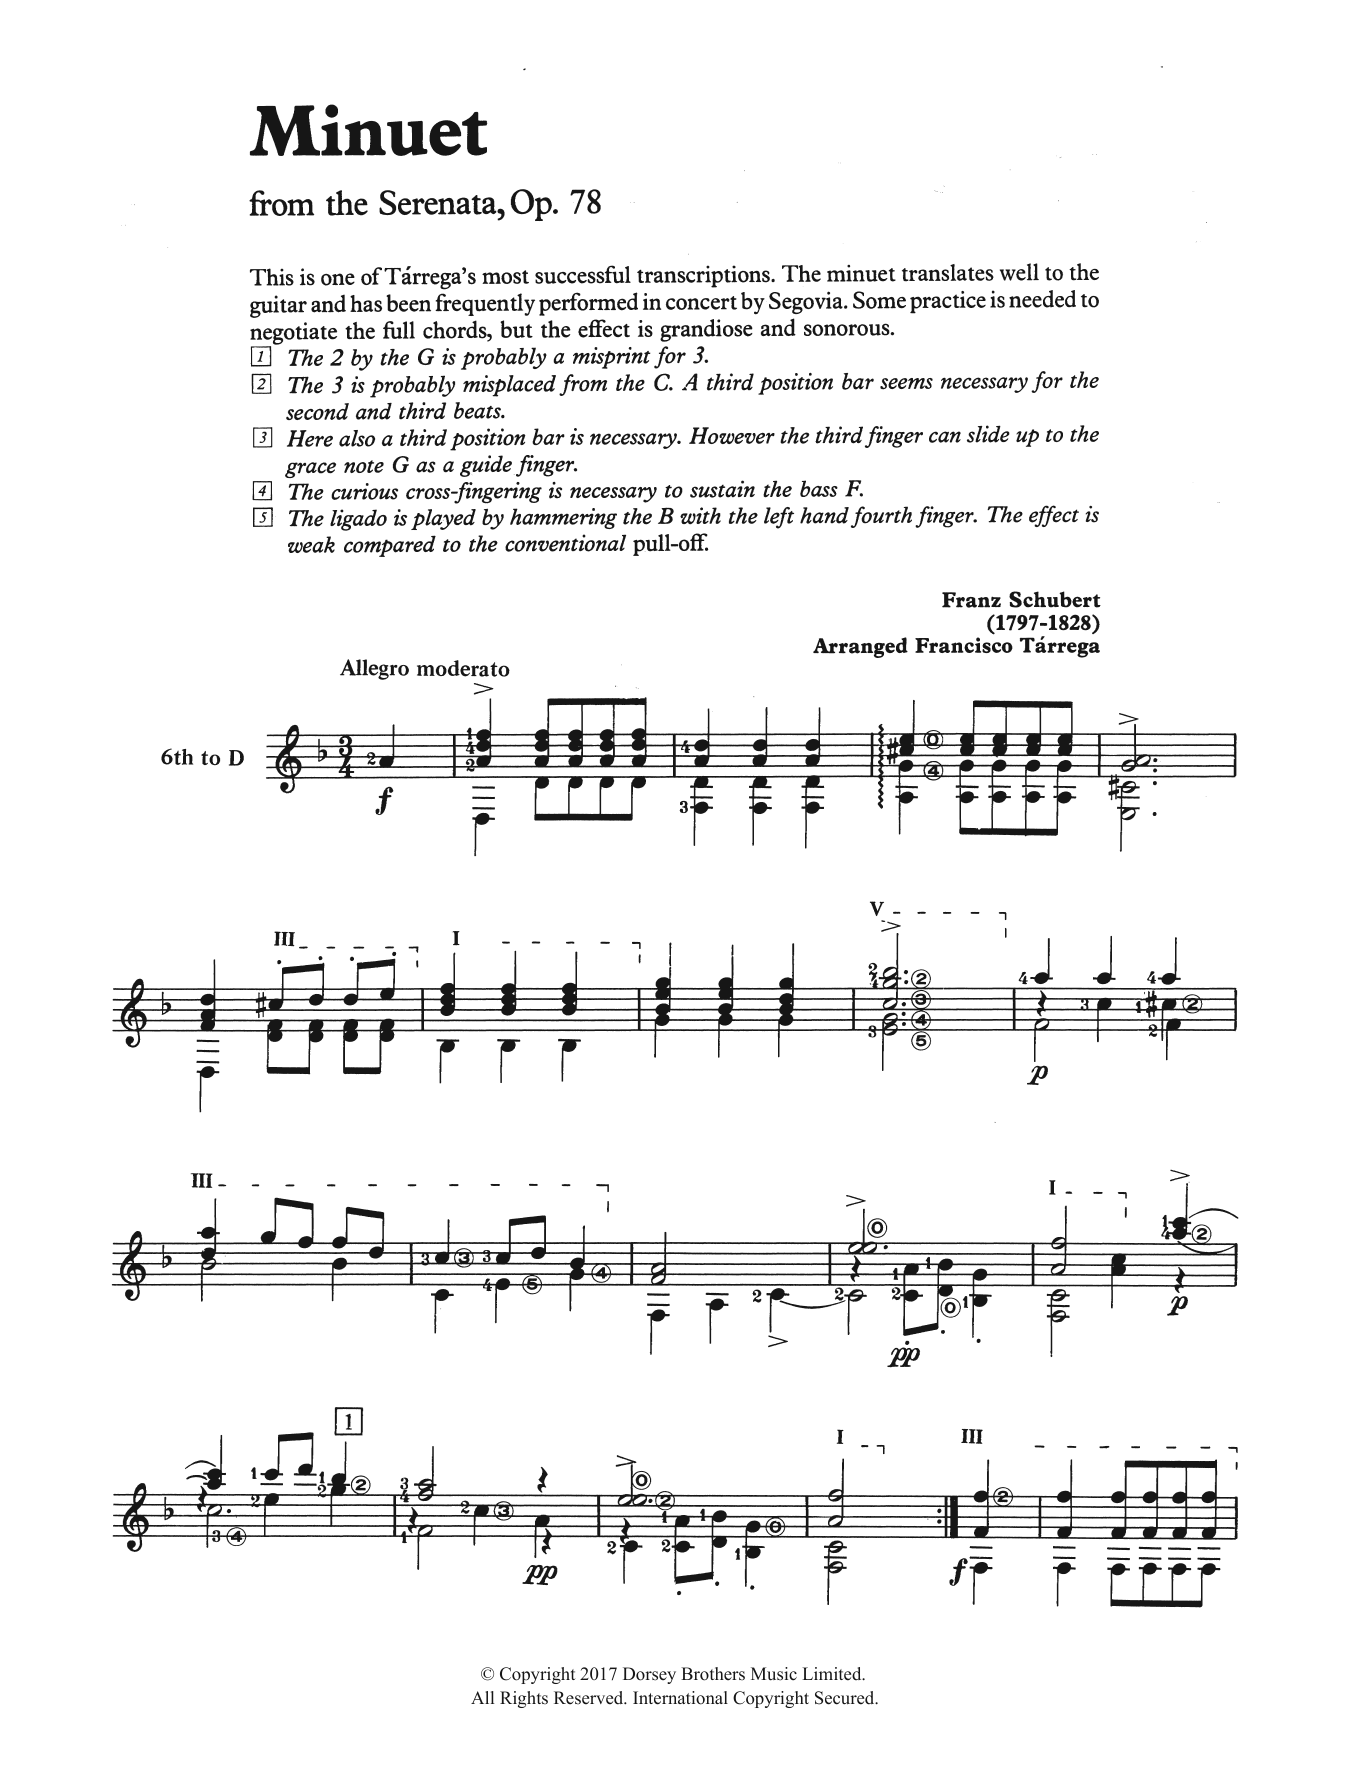 Franz Schubert Minuet (from the Serenata, Op. 78) Sheet Music Notes & Chords for Guitar - Download or Print PDF